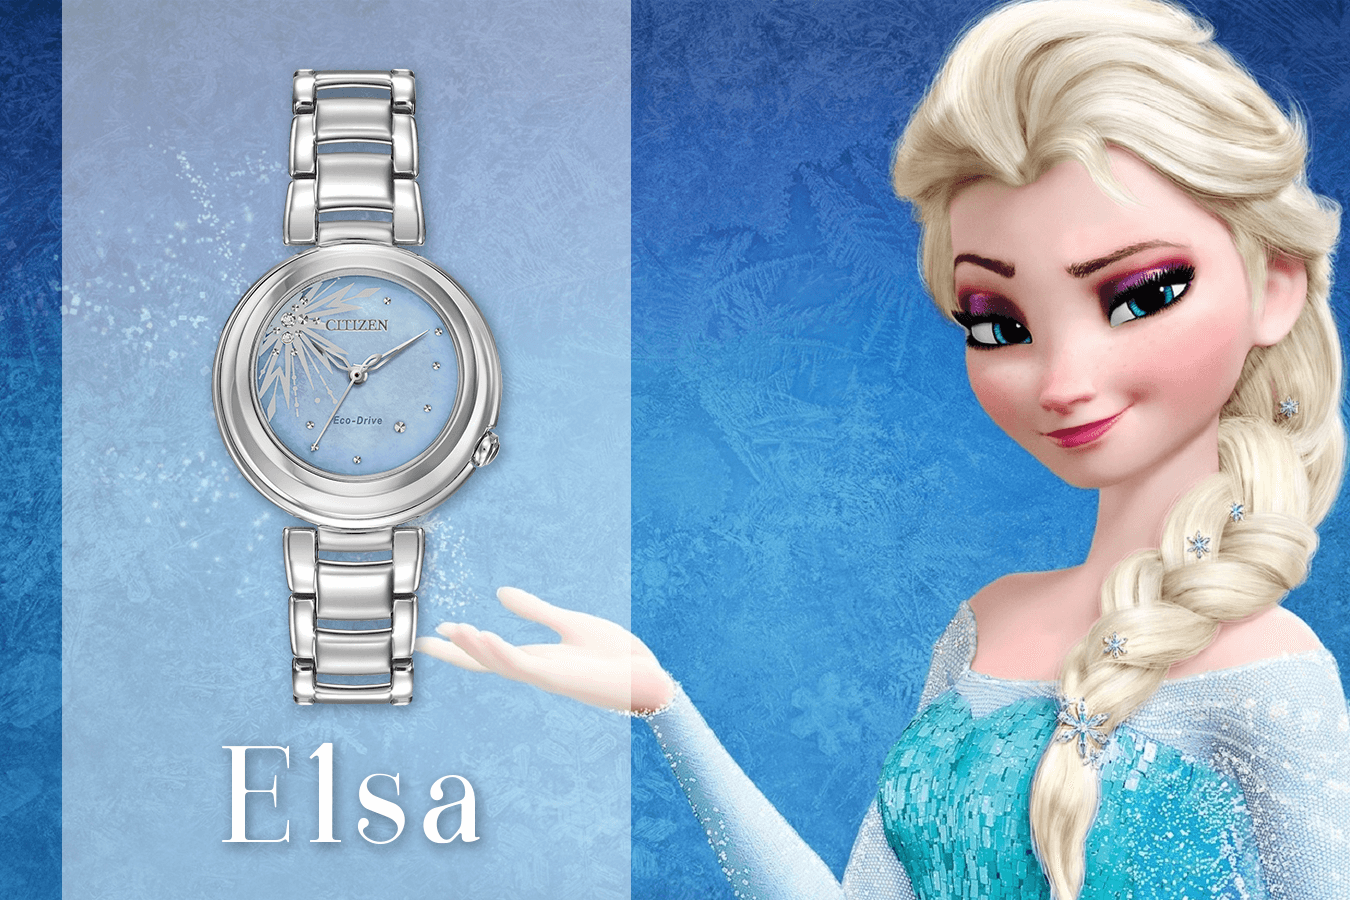  Citizen Disney Princess Diamond - Elsa (Frozen)